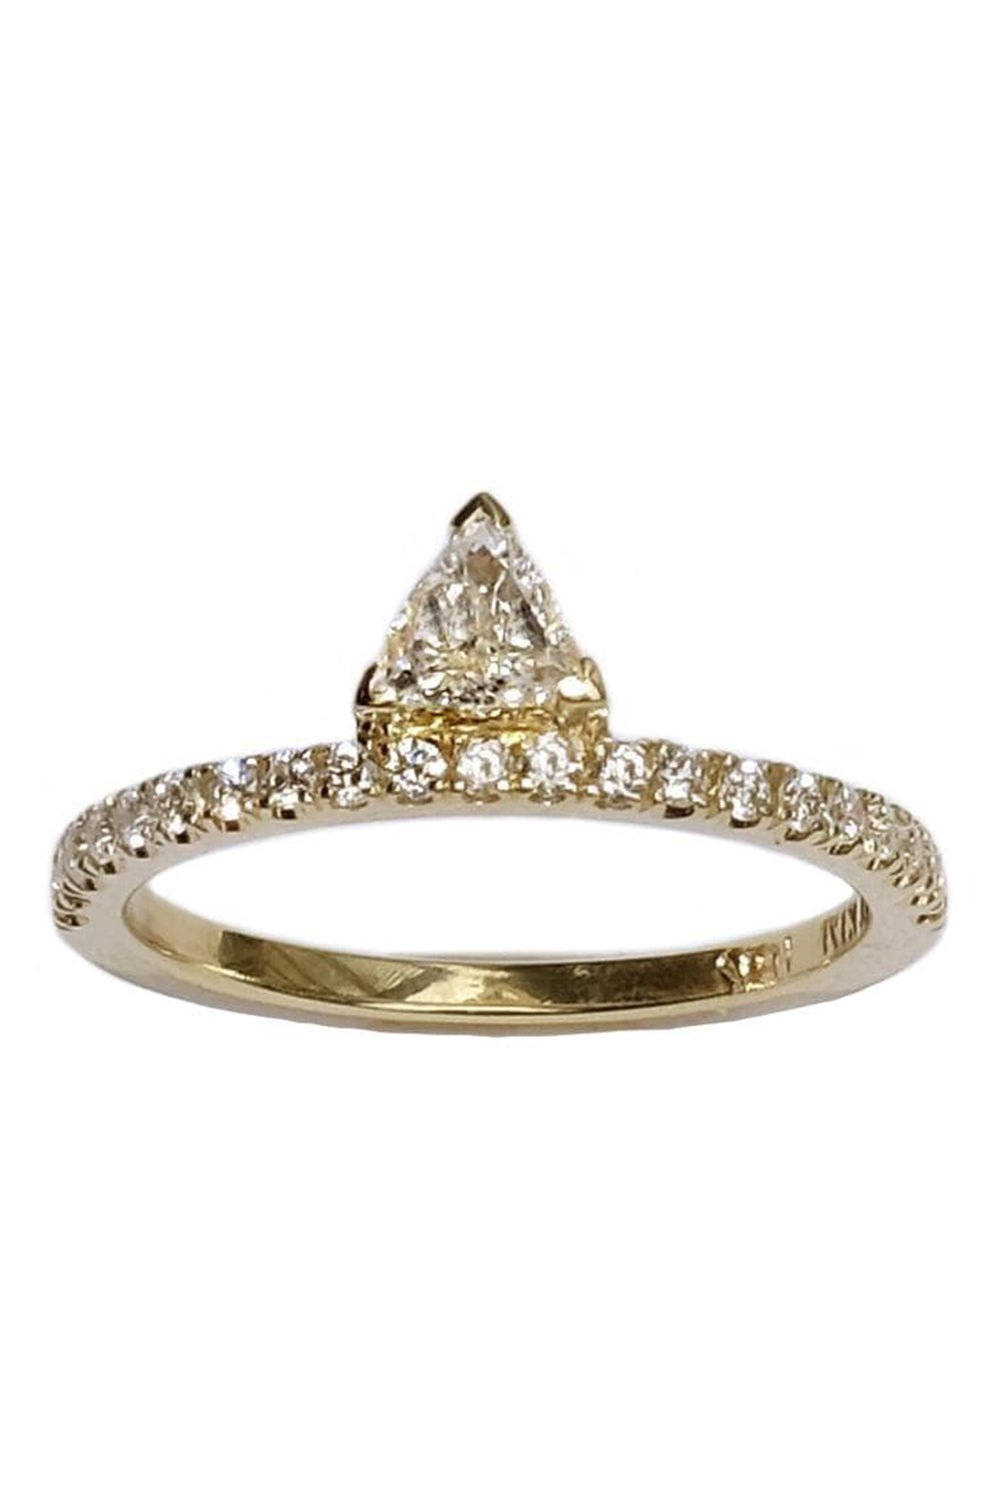 KATKIM-Trillion Peak Pave Diamond Ring-YELLOW GOLD